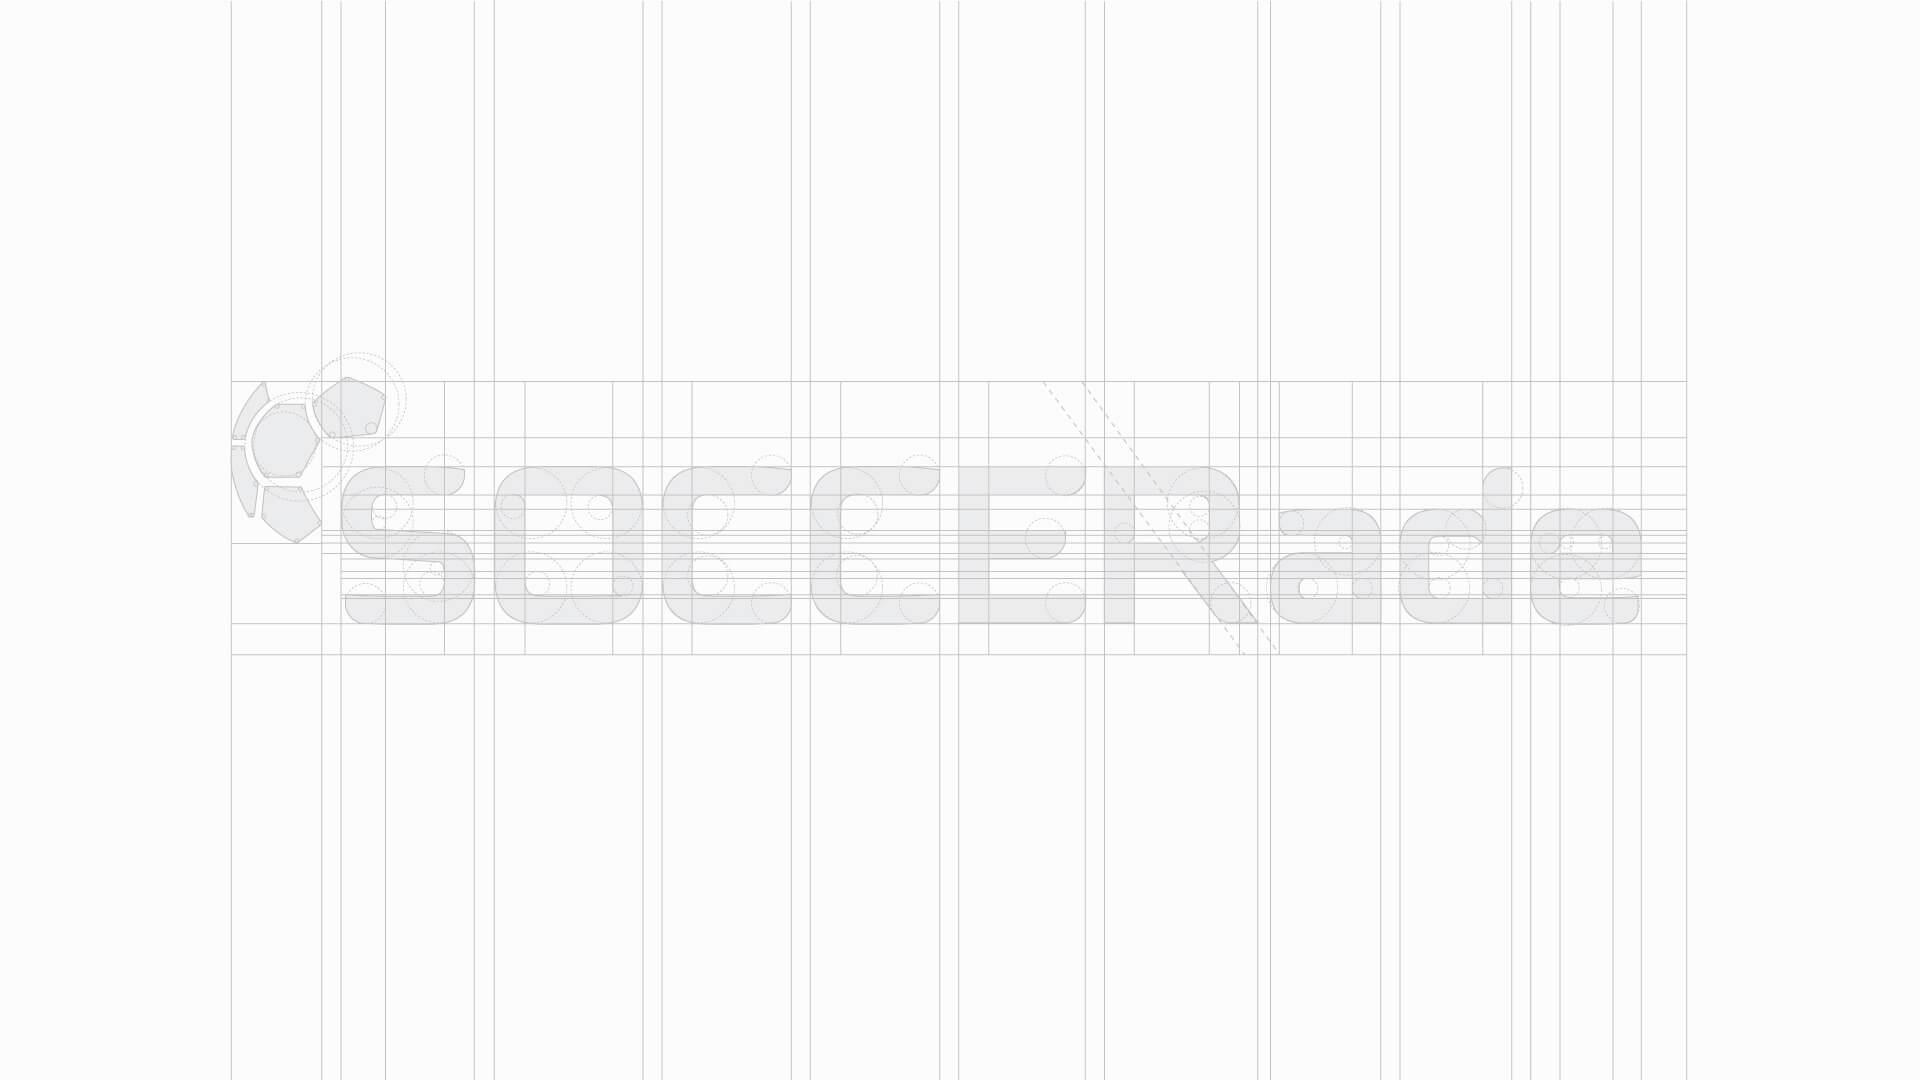 soccerade_logo_guidelines5